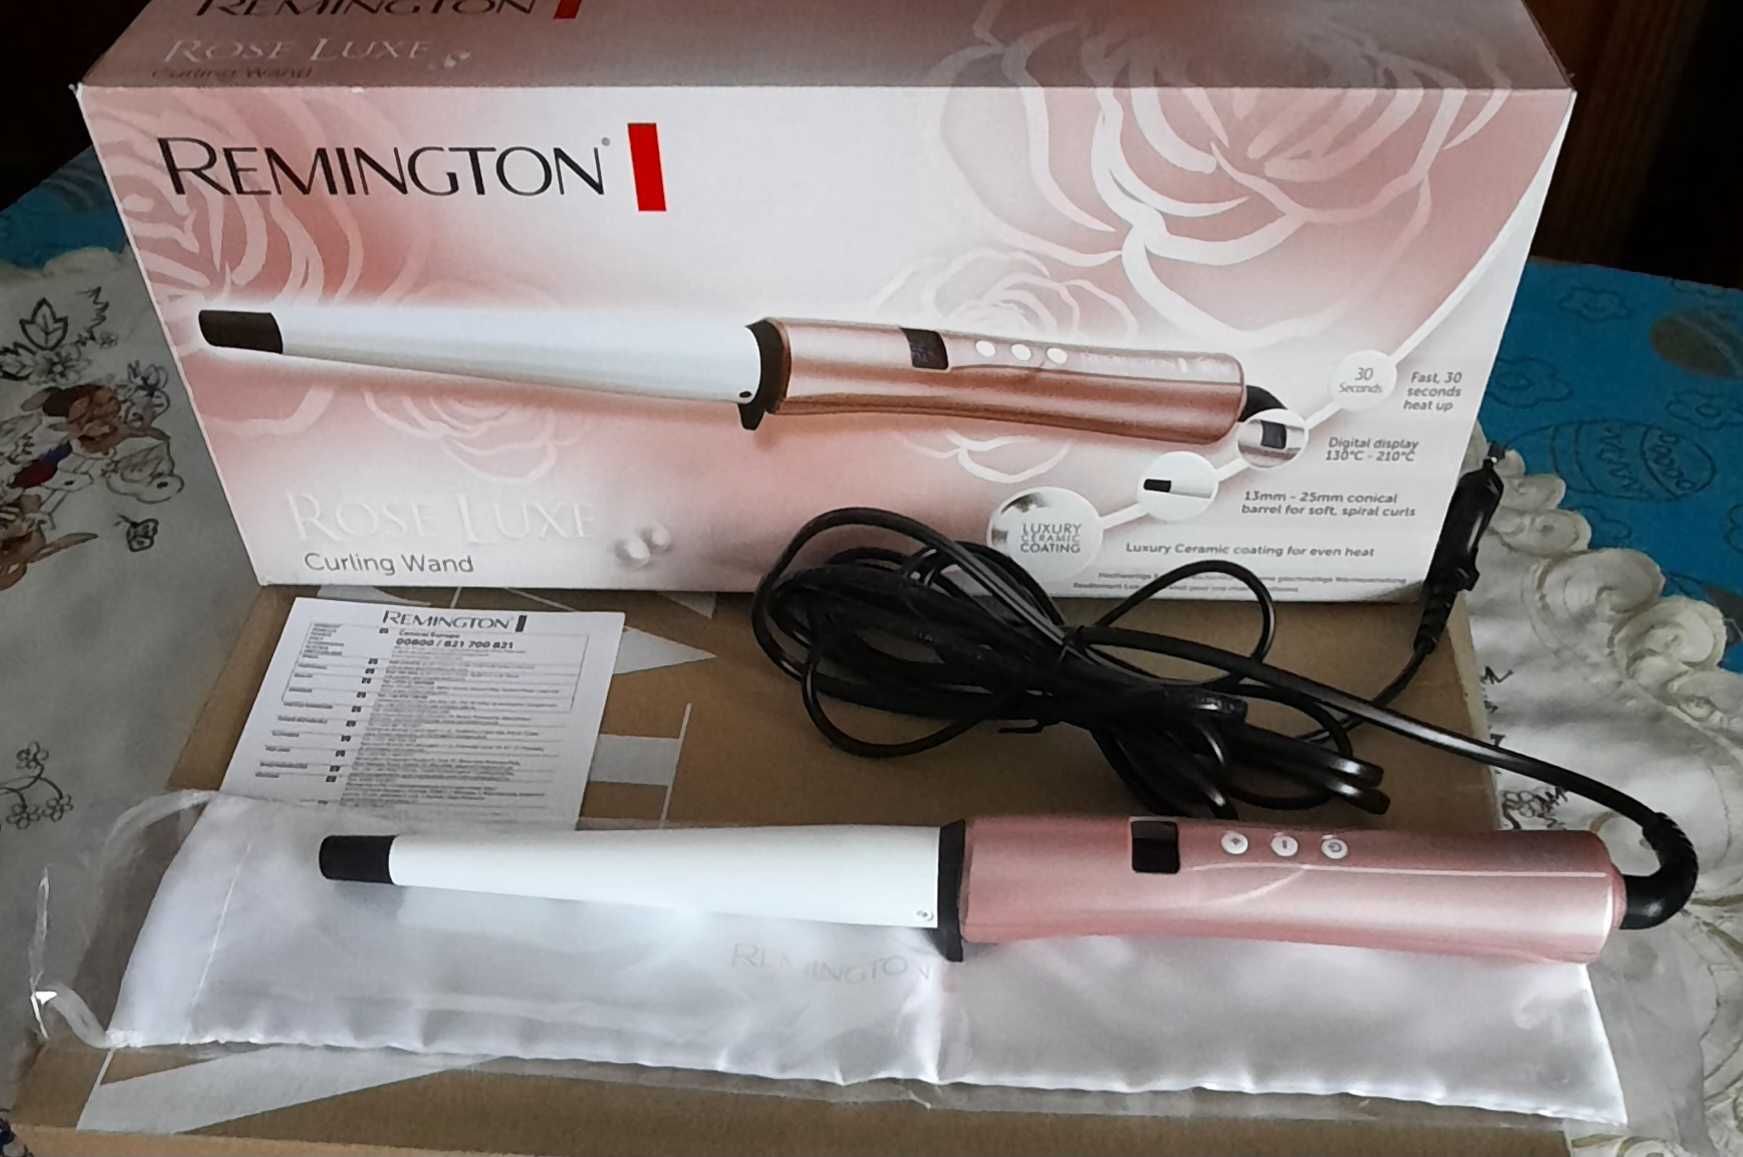 Ondulator Remington rose luxe